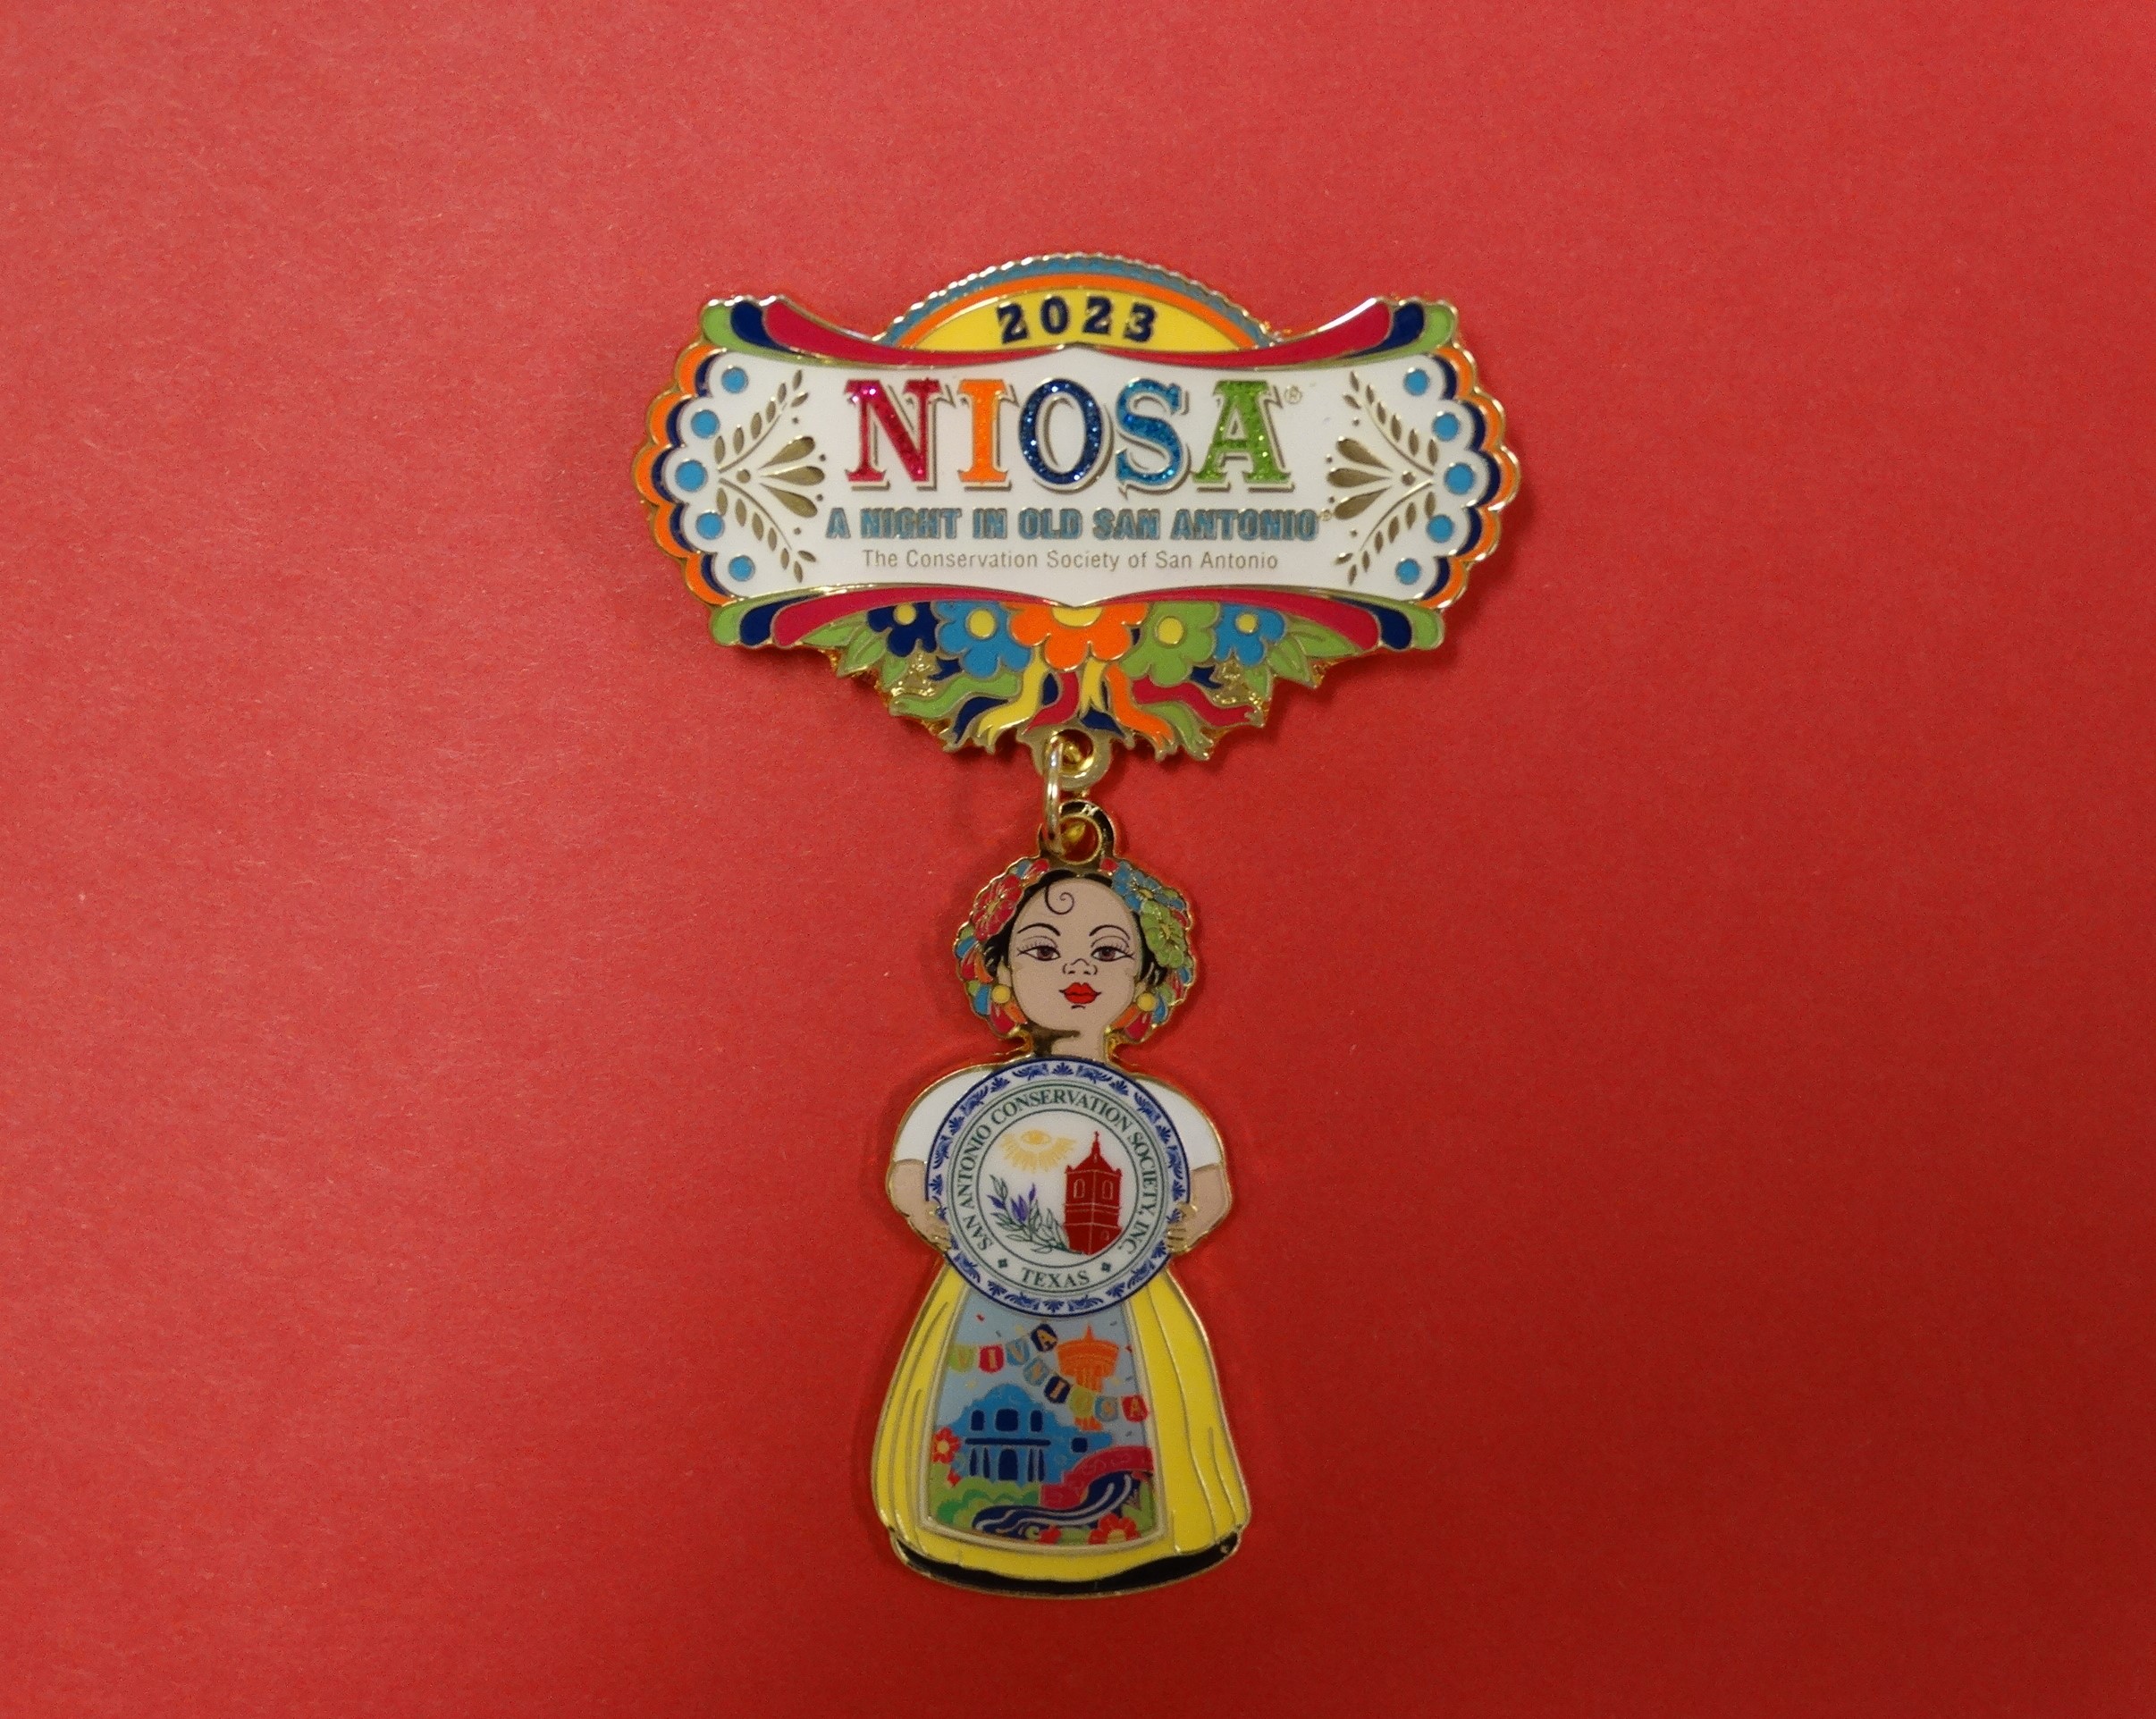 NIOSA 2023 Fiesta medal